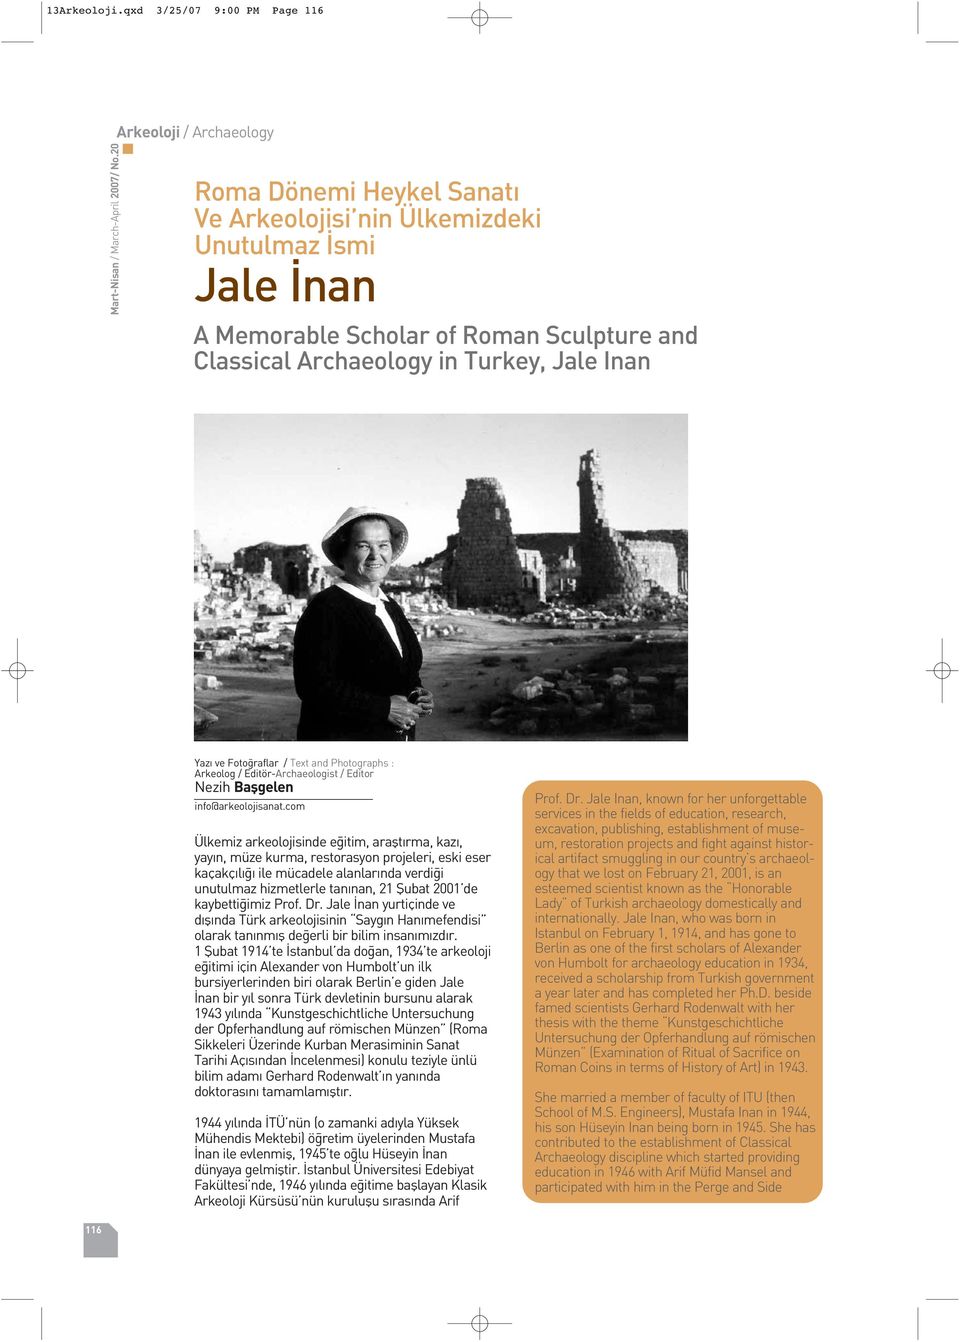 Photographs : Arkeolog / Editör-Archaeologist / Editor Nezih Baflgelen info@arkeolojisanat.